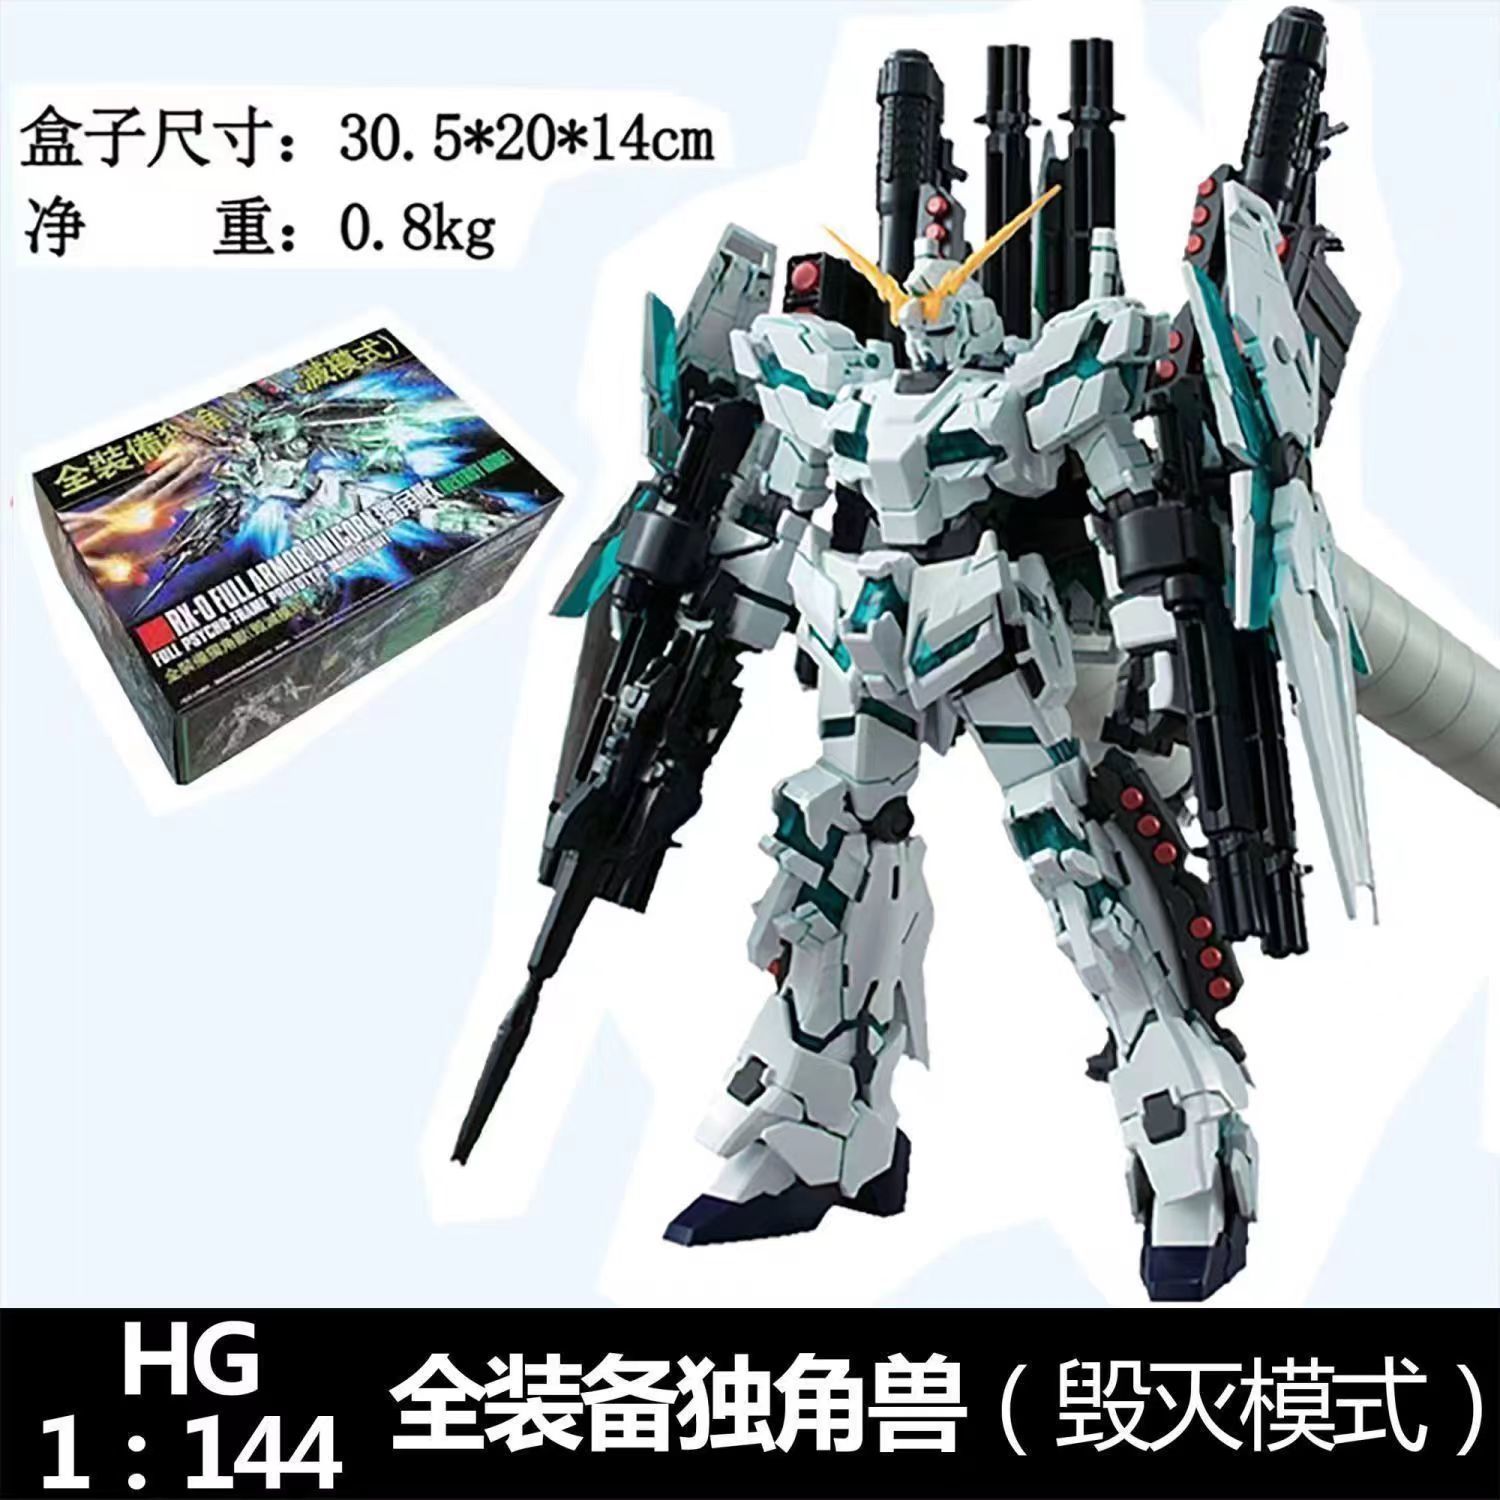 Big Class Black Box Hg100 Unicorn Full Equipment 134 Mourning Banshee 144 Destruction Mode Assembled Gundam Model